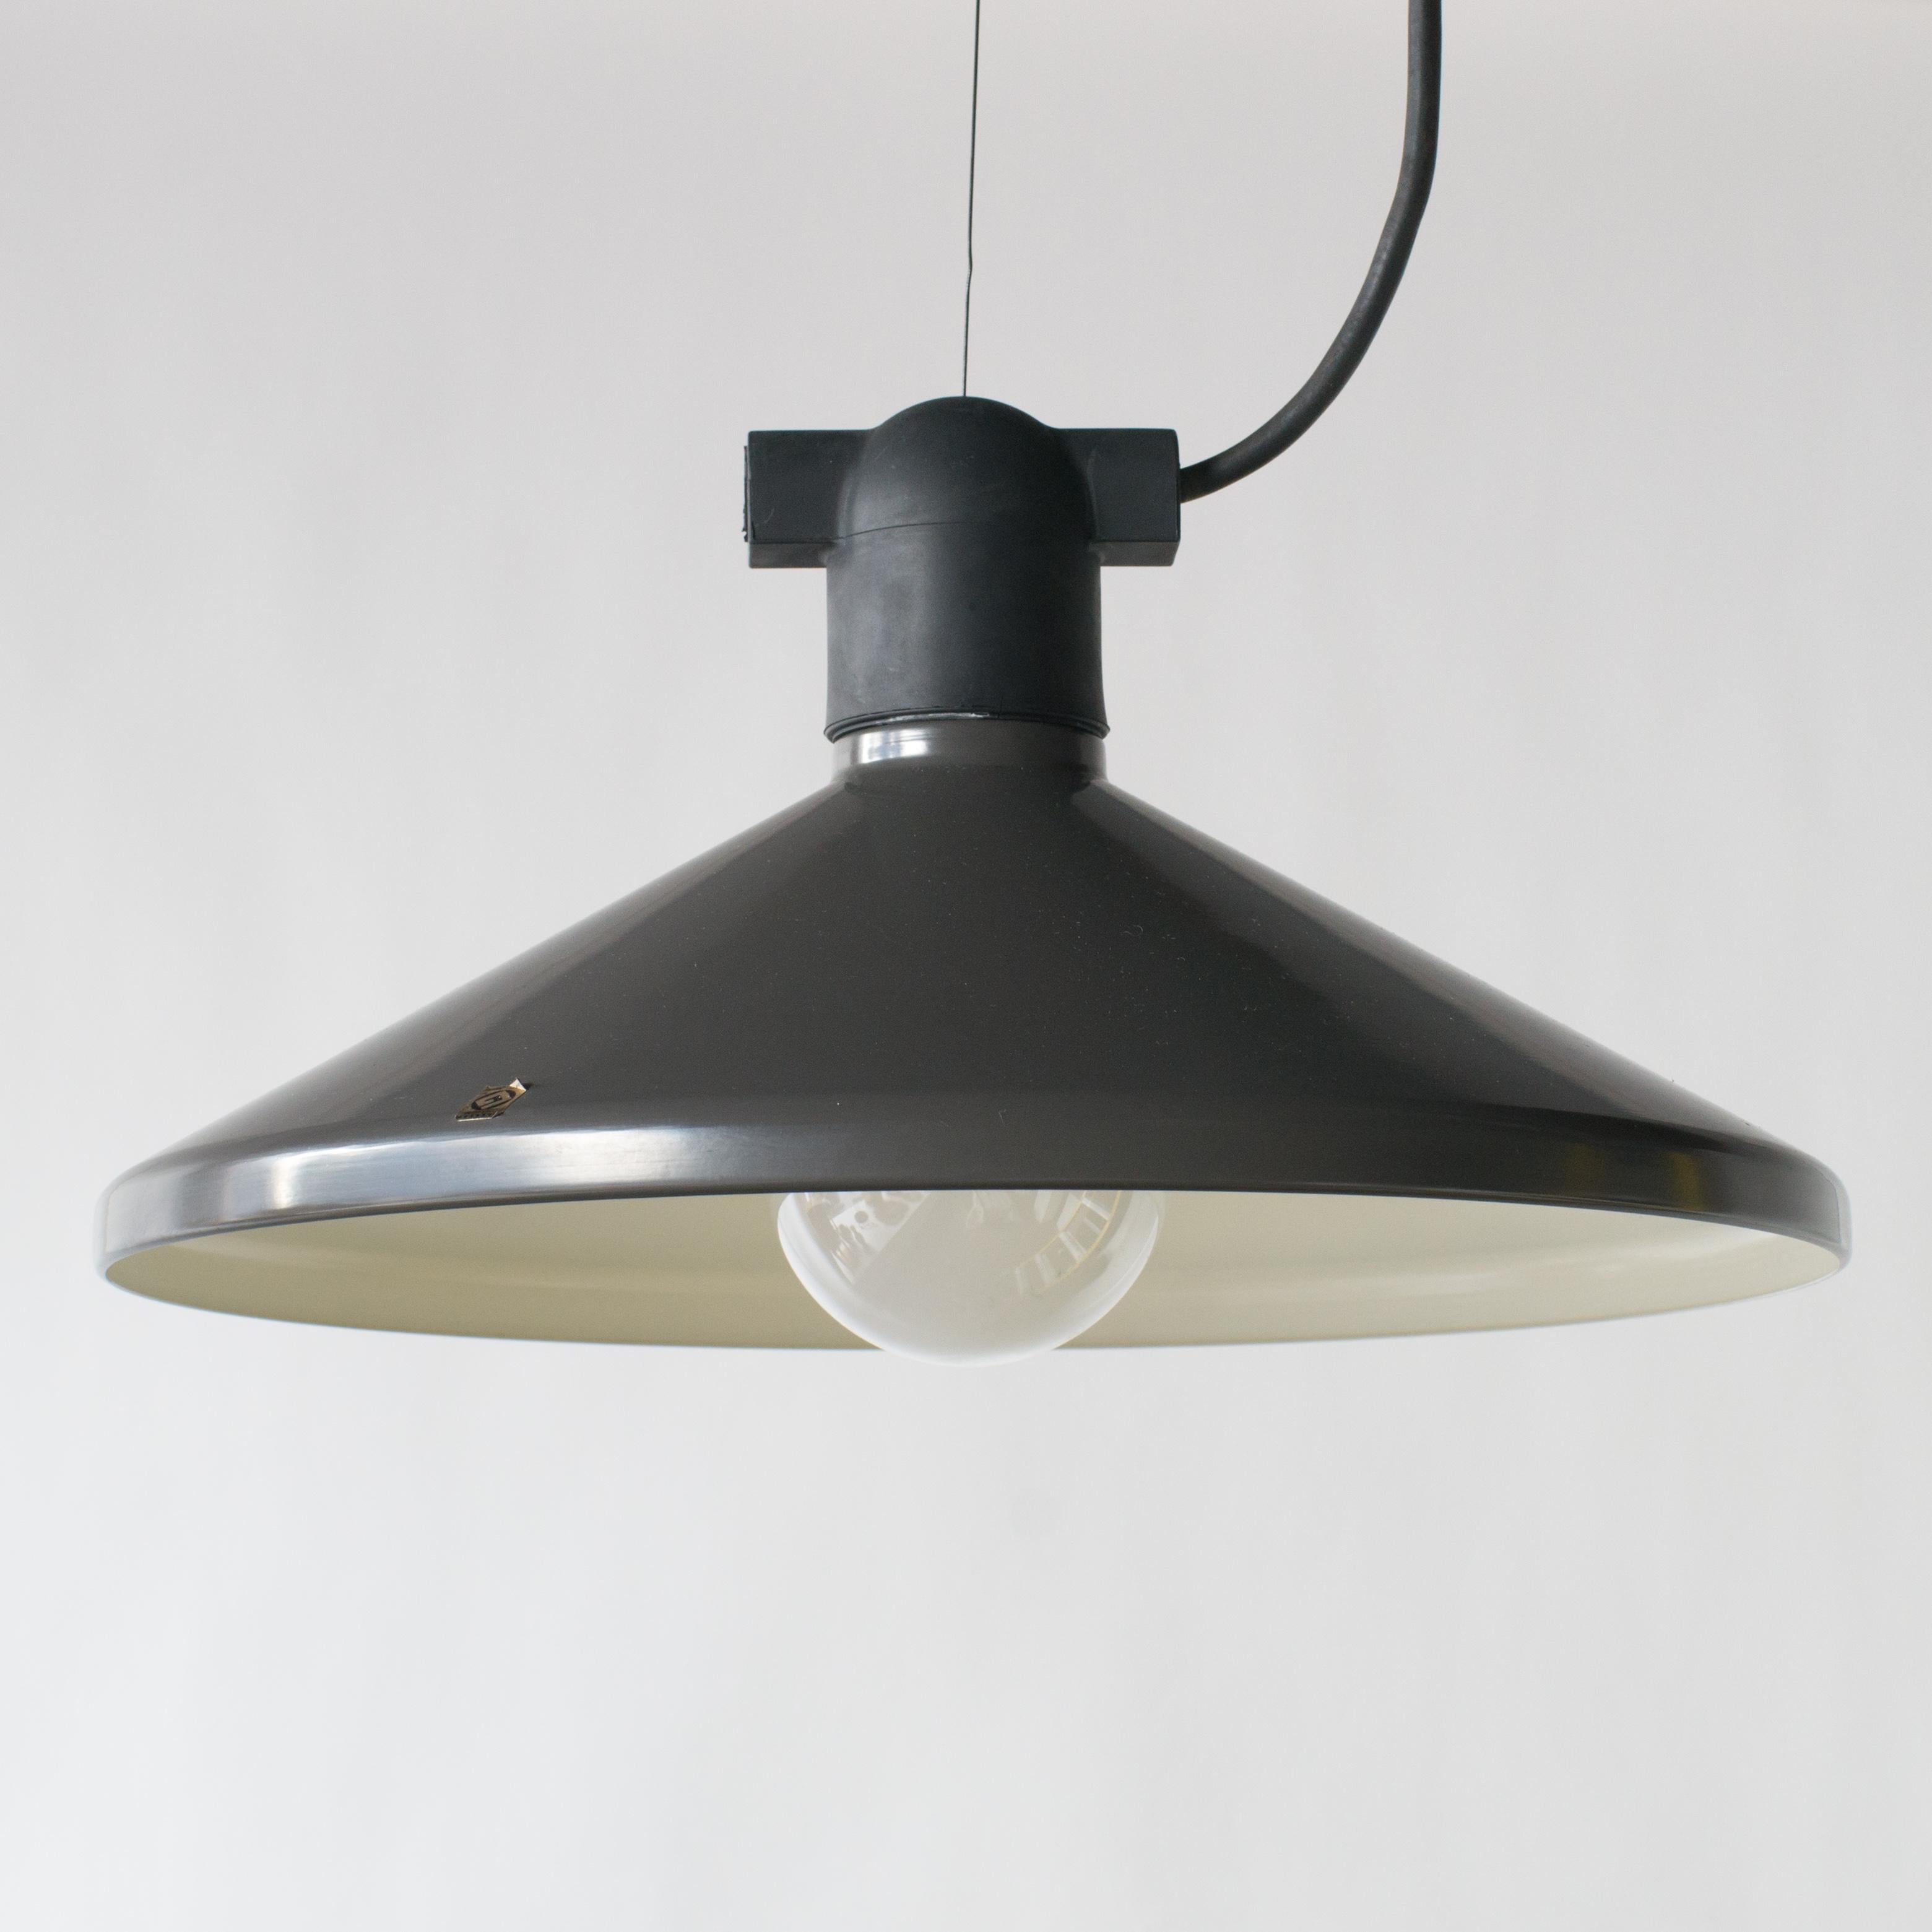 Campana pendant lamp designed by Masayuki Kurokawa for Yamagiwa. Made of steel and rubber lim. Painted in dark grey.